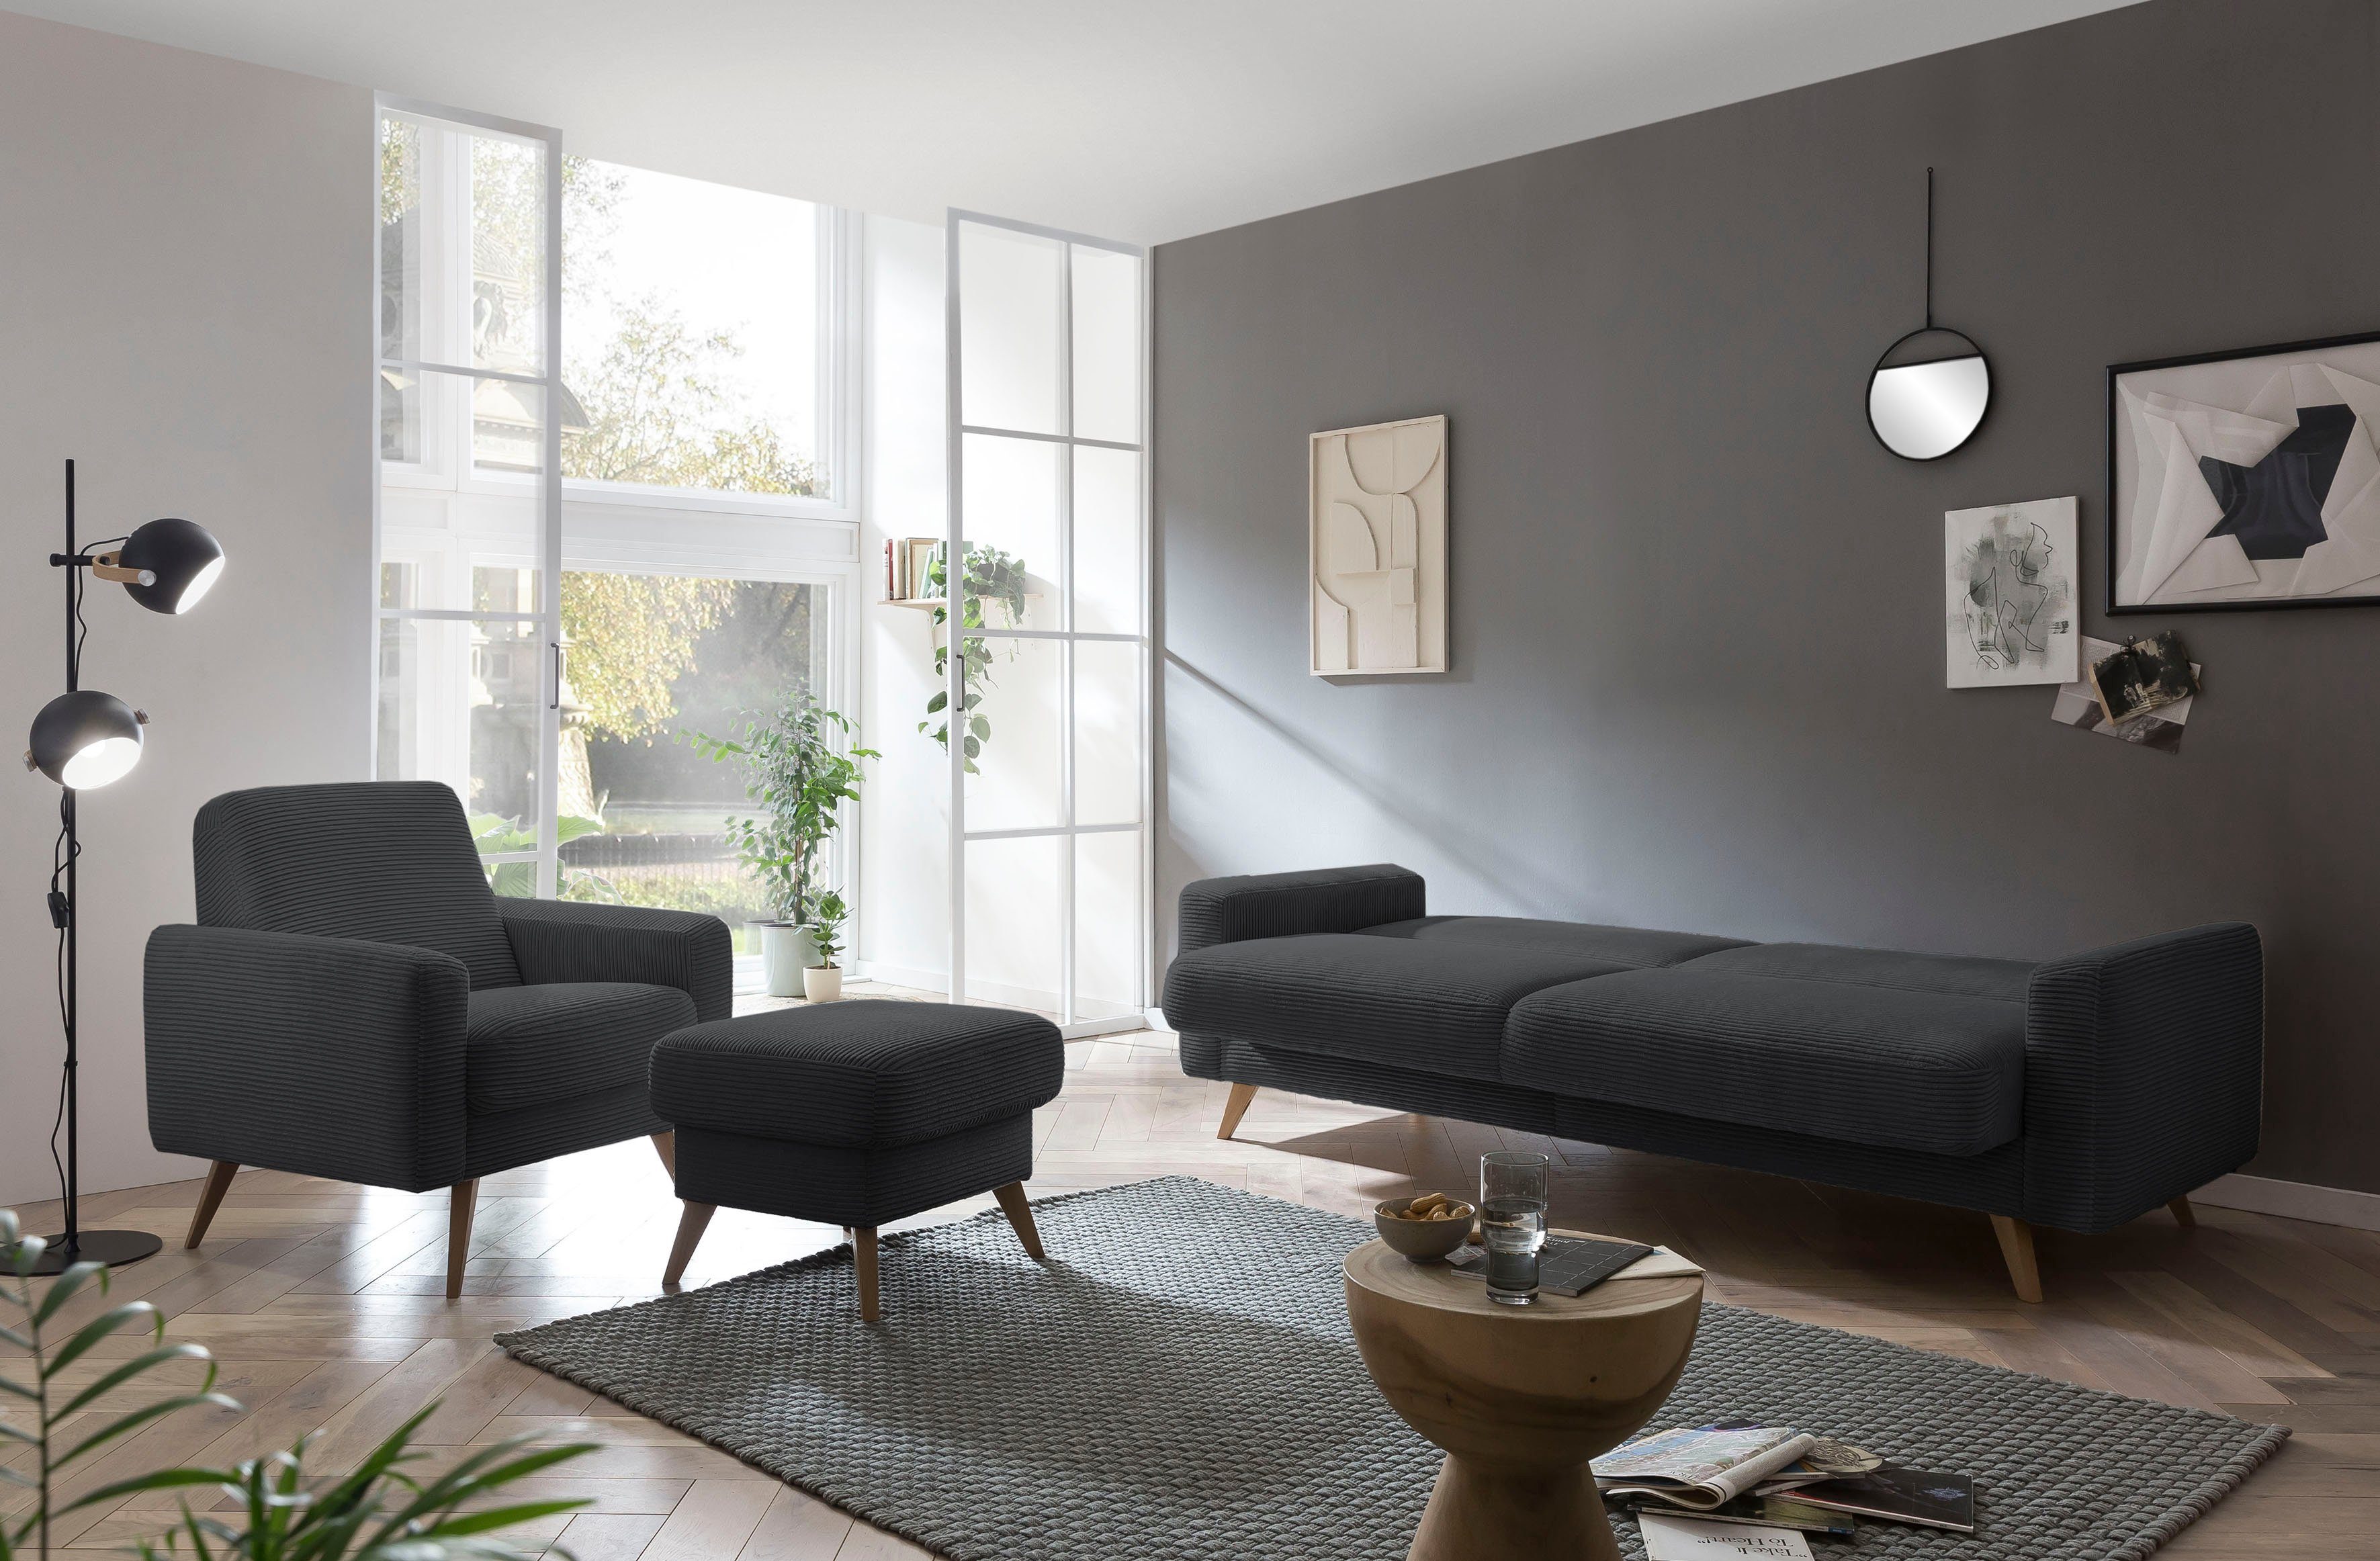 sofa 3-Sitzer antrazith Samso, fashion Bettkasten Bettfunktion - Inklusive exxpo und